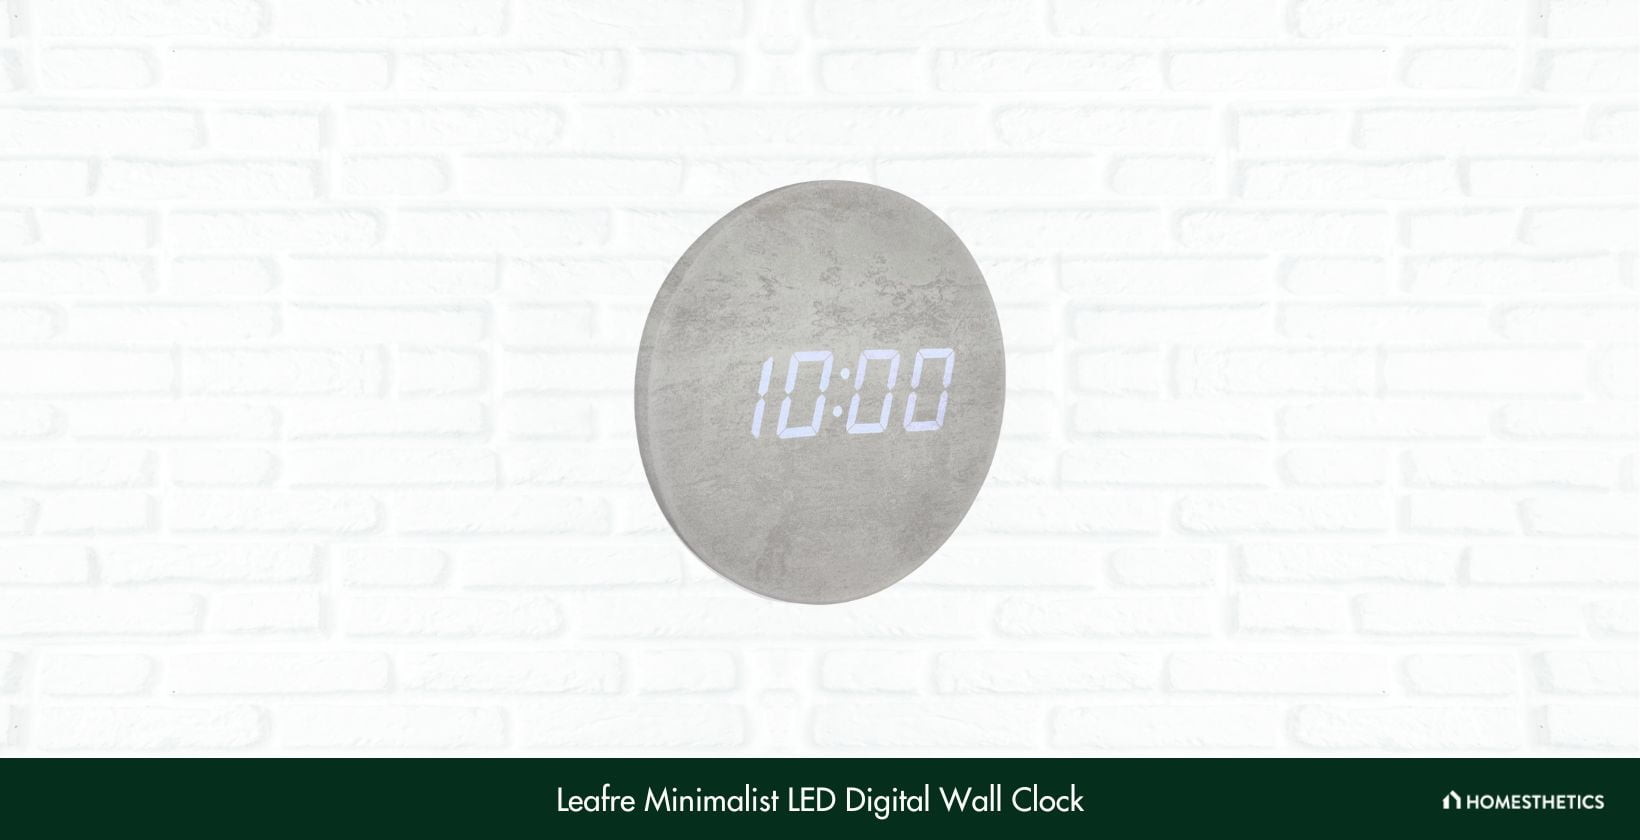 Leafre Minimalist LED Digital Wall Clock